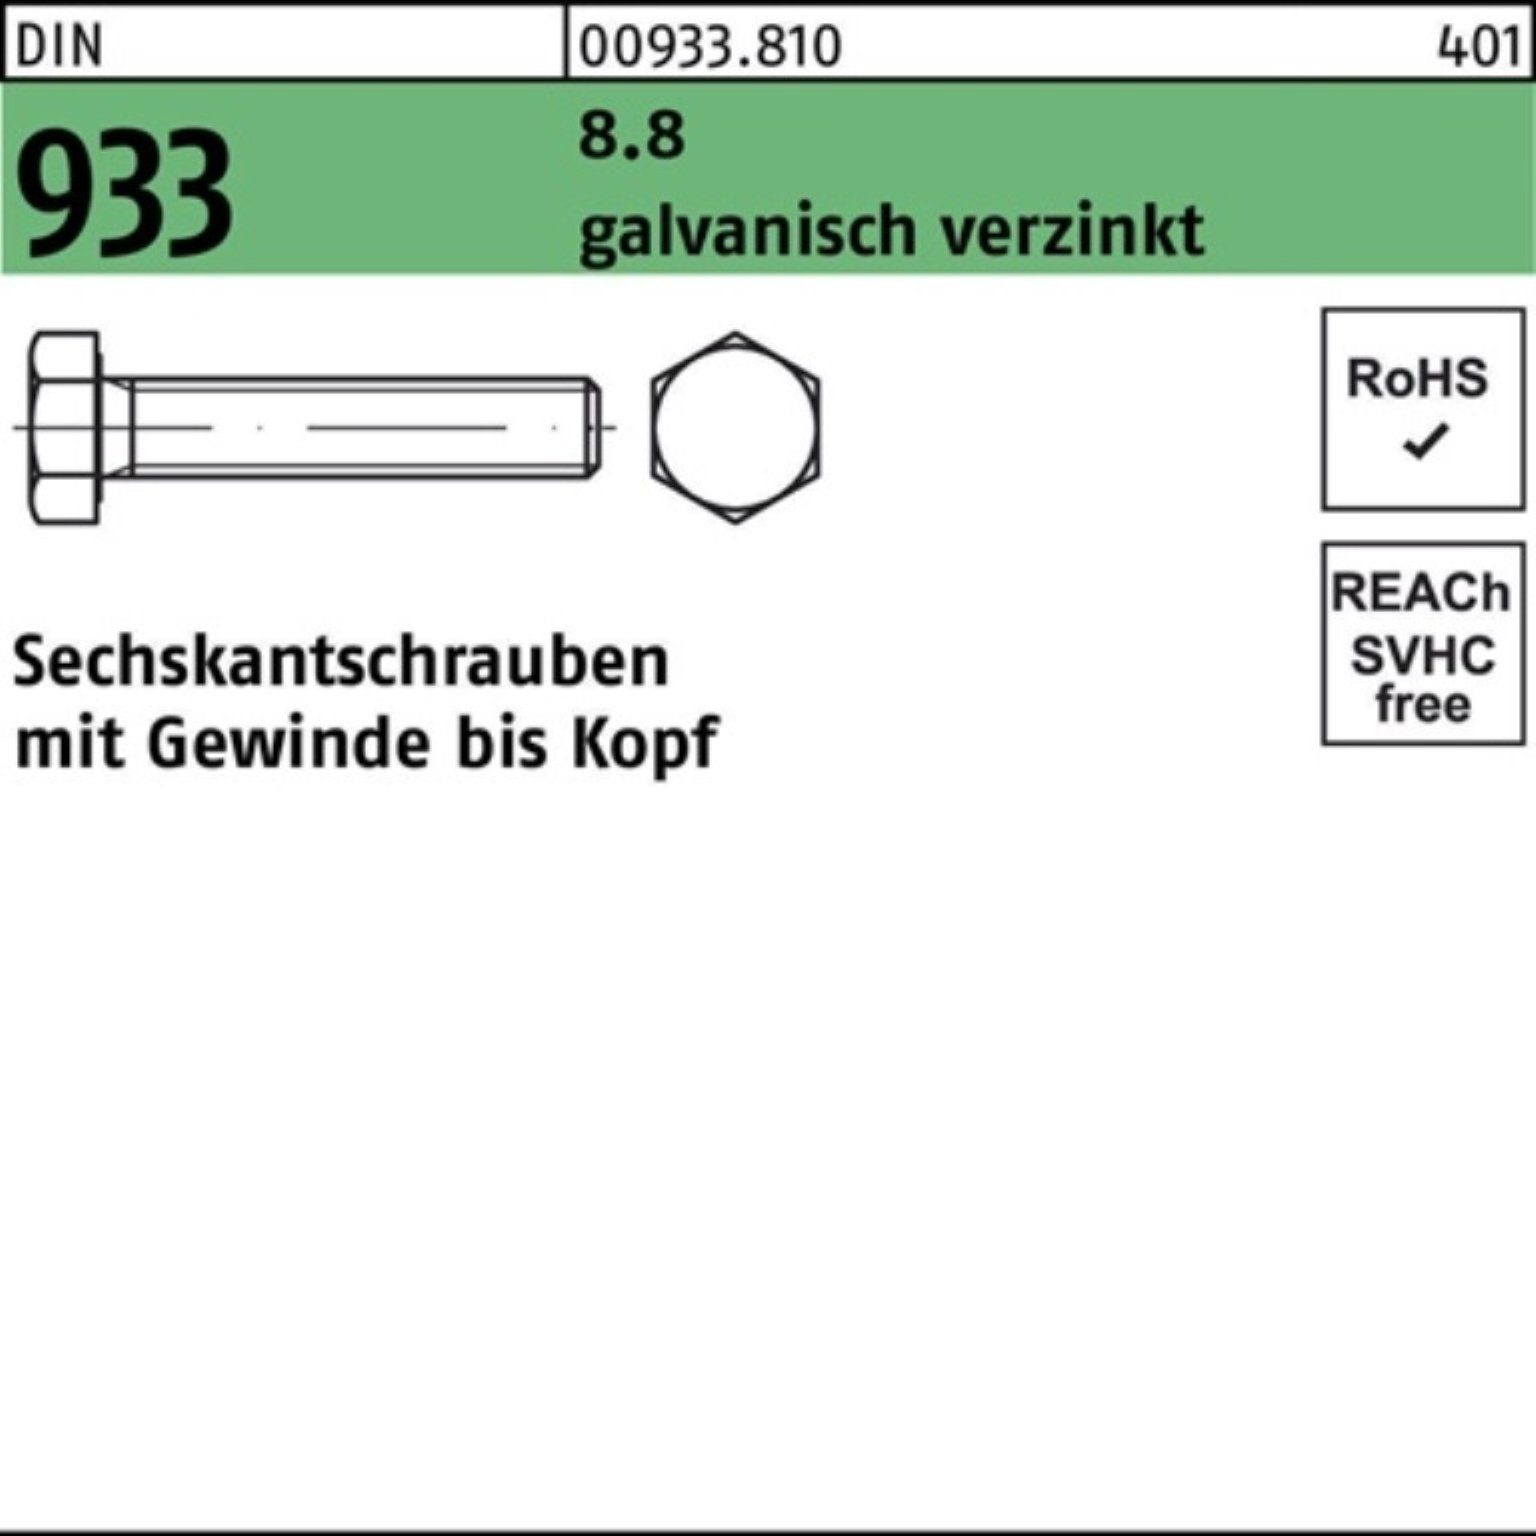 Reyher Sechskantschraube 1 Sechskantschraube 8.8 M20x 933 DIN Stü Pack 100er 240 VG galv.verz